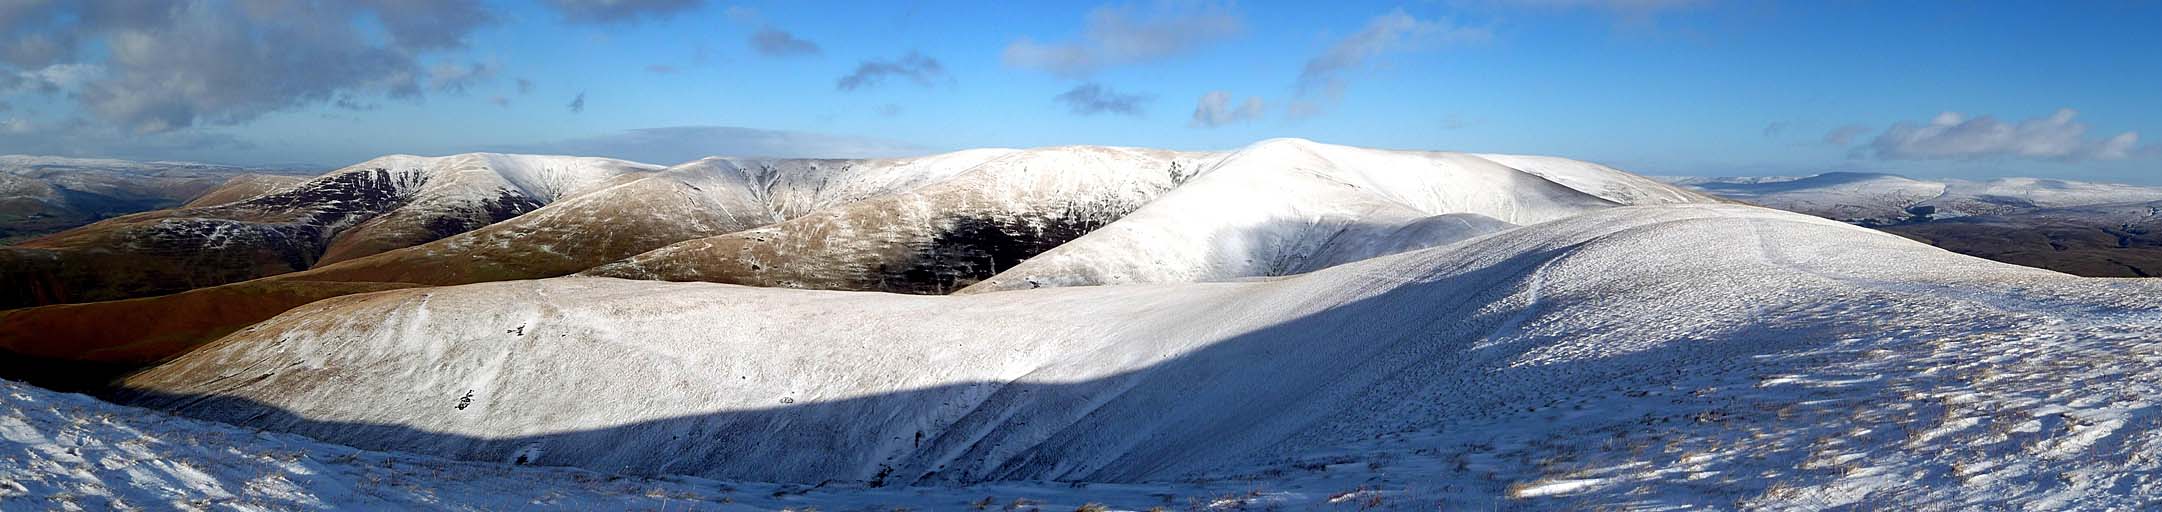 Arant Haw in Snow (Howgills)